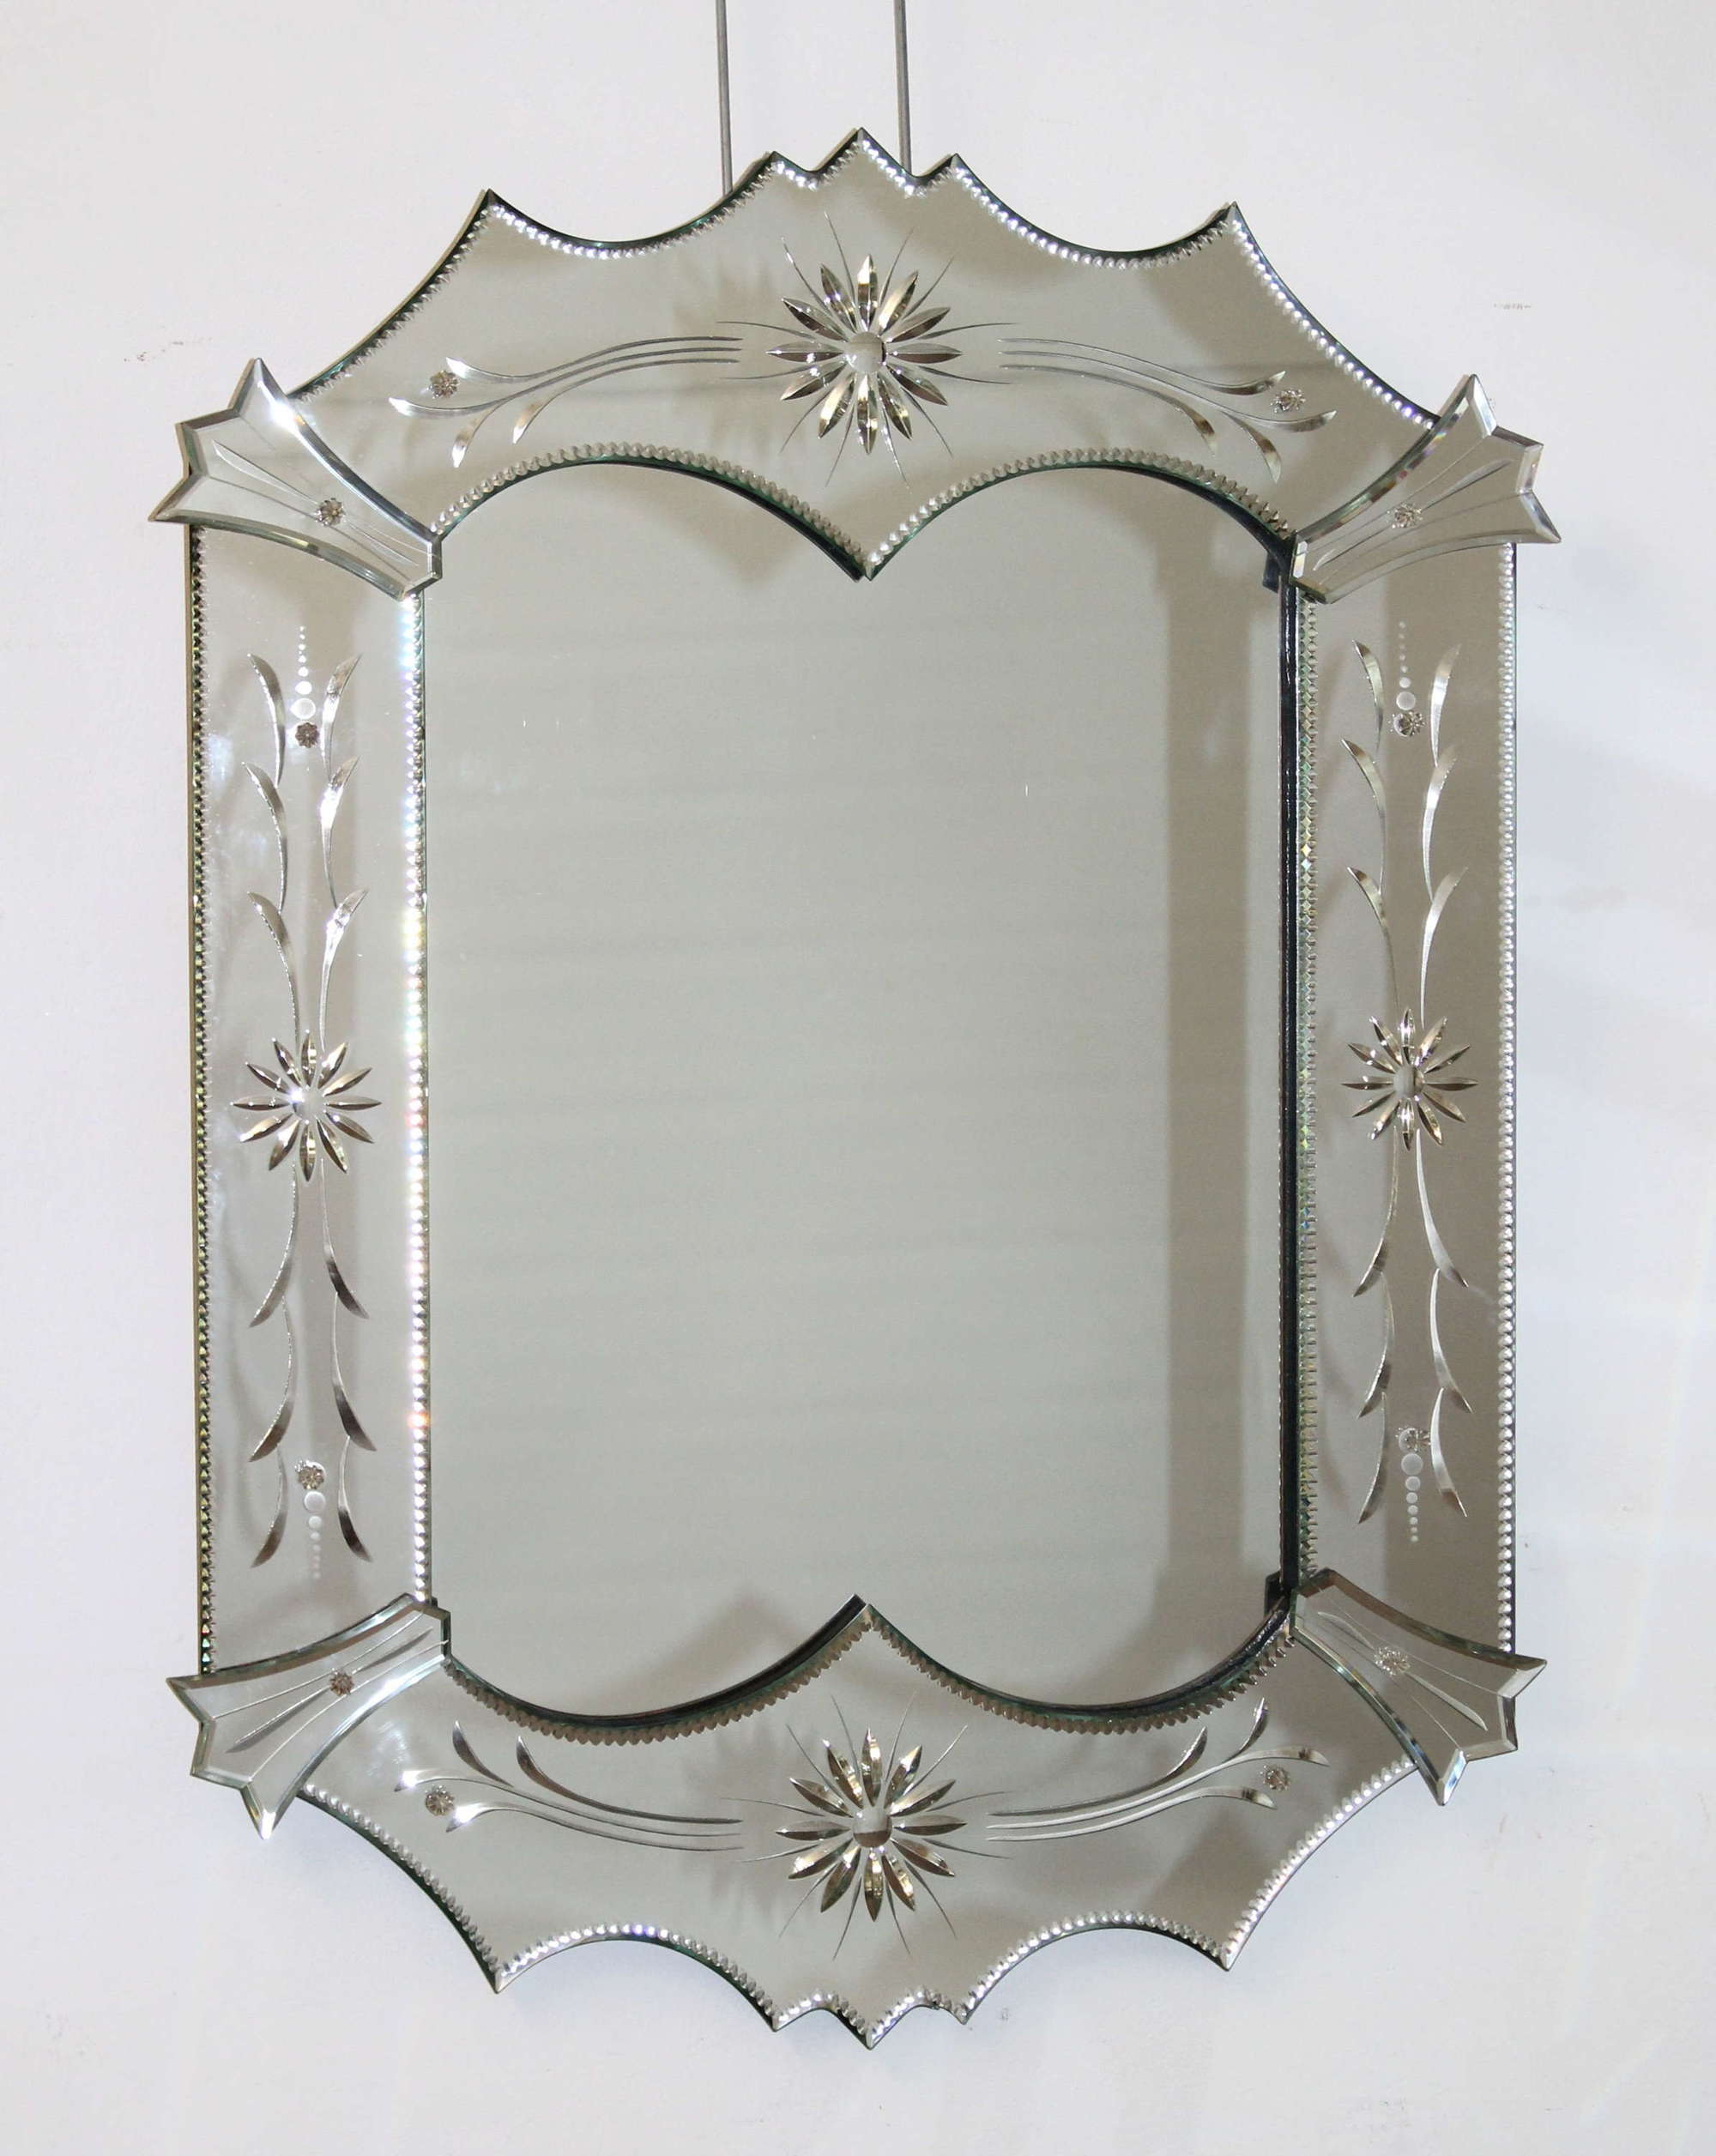 Decorative Vintage Venetian style mirror